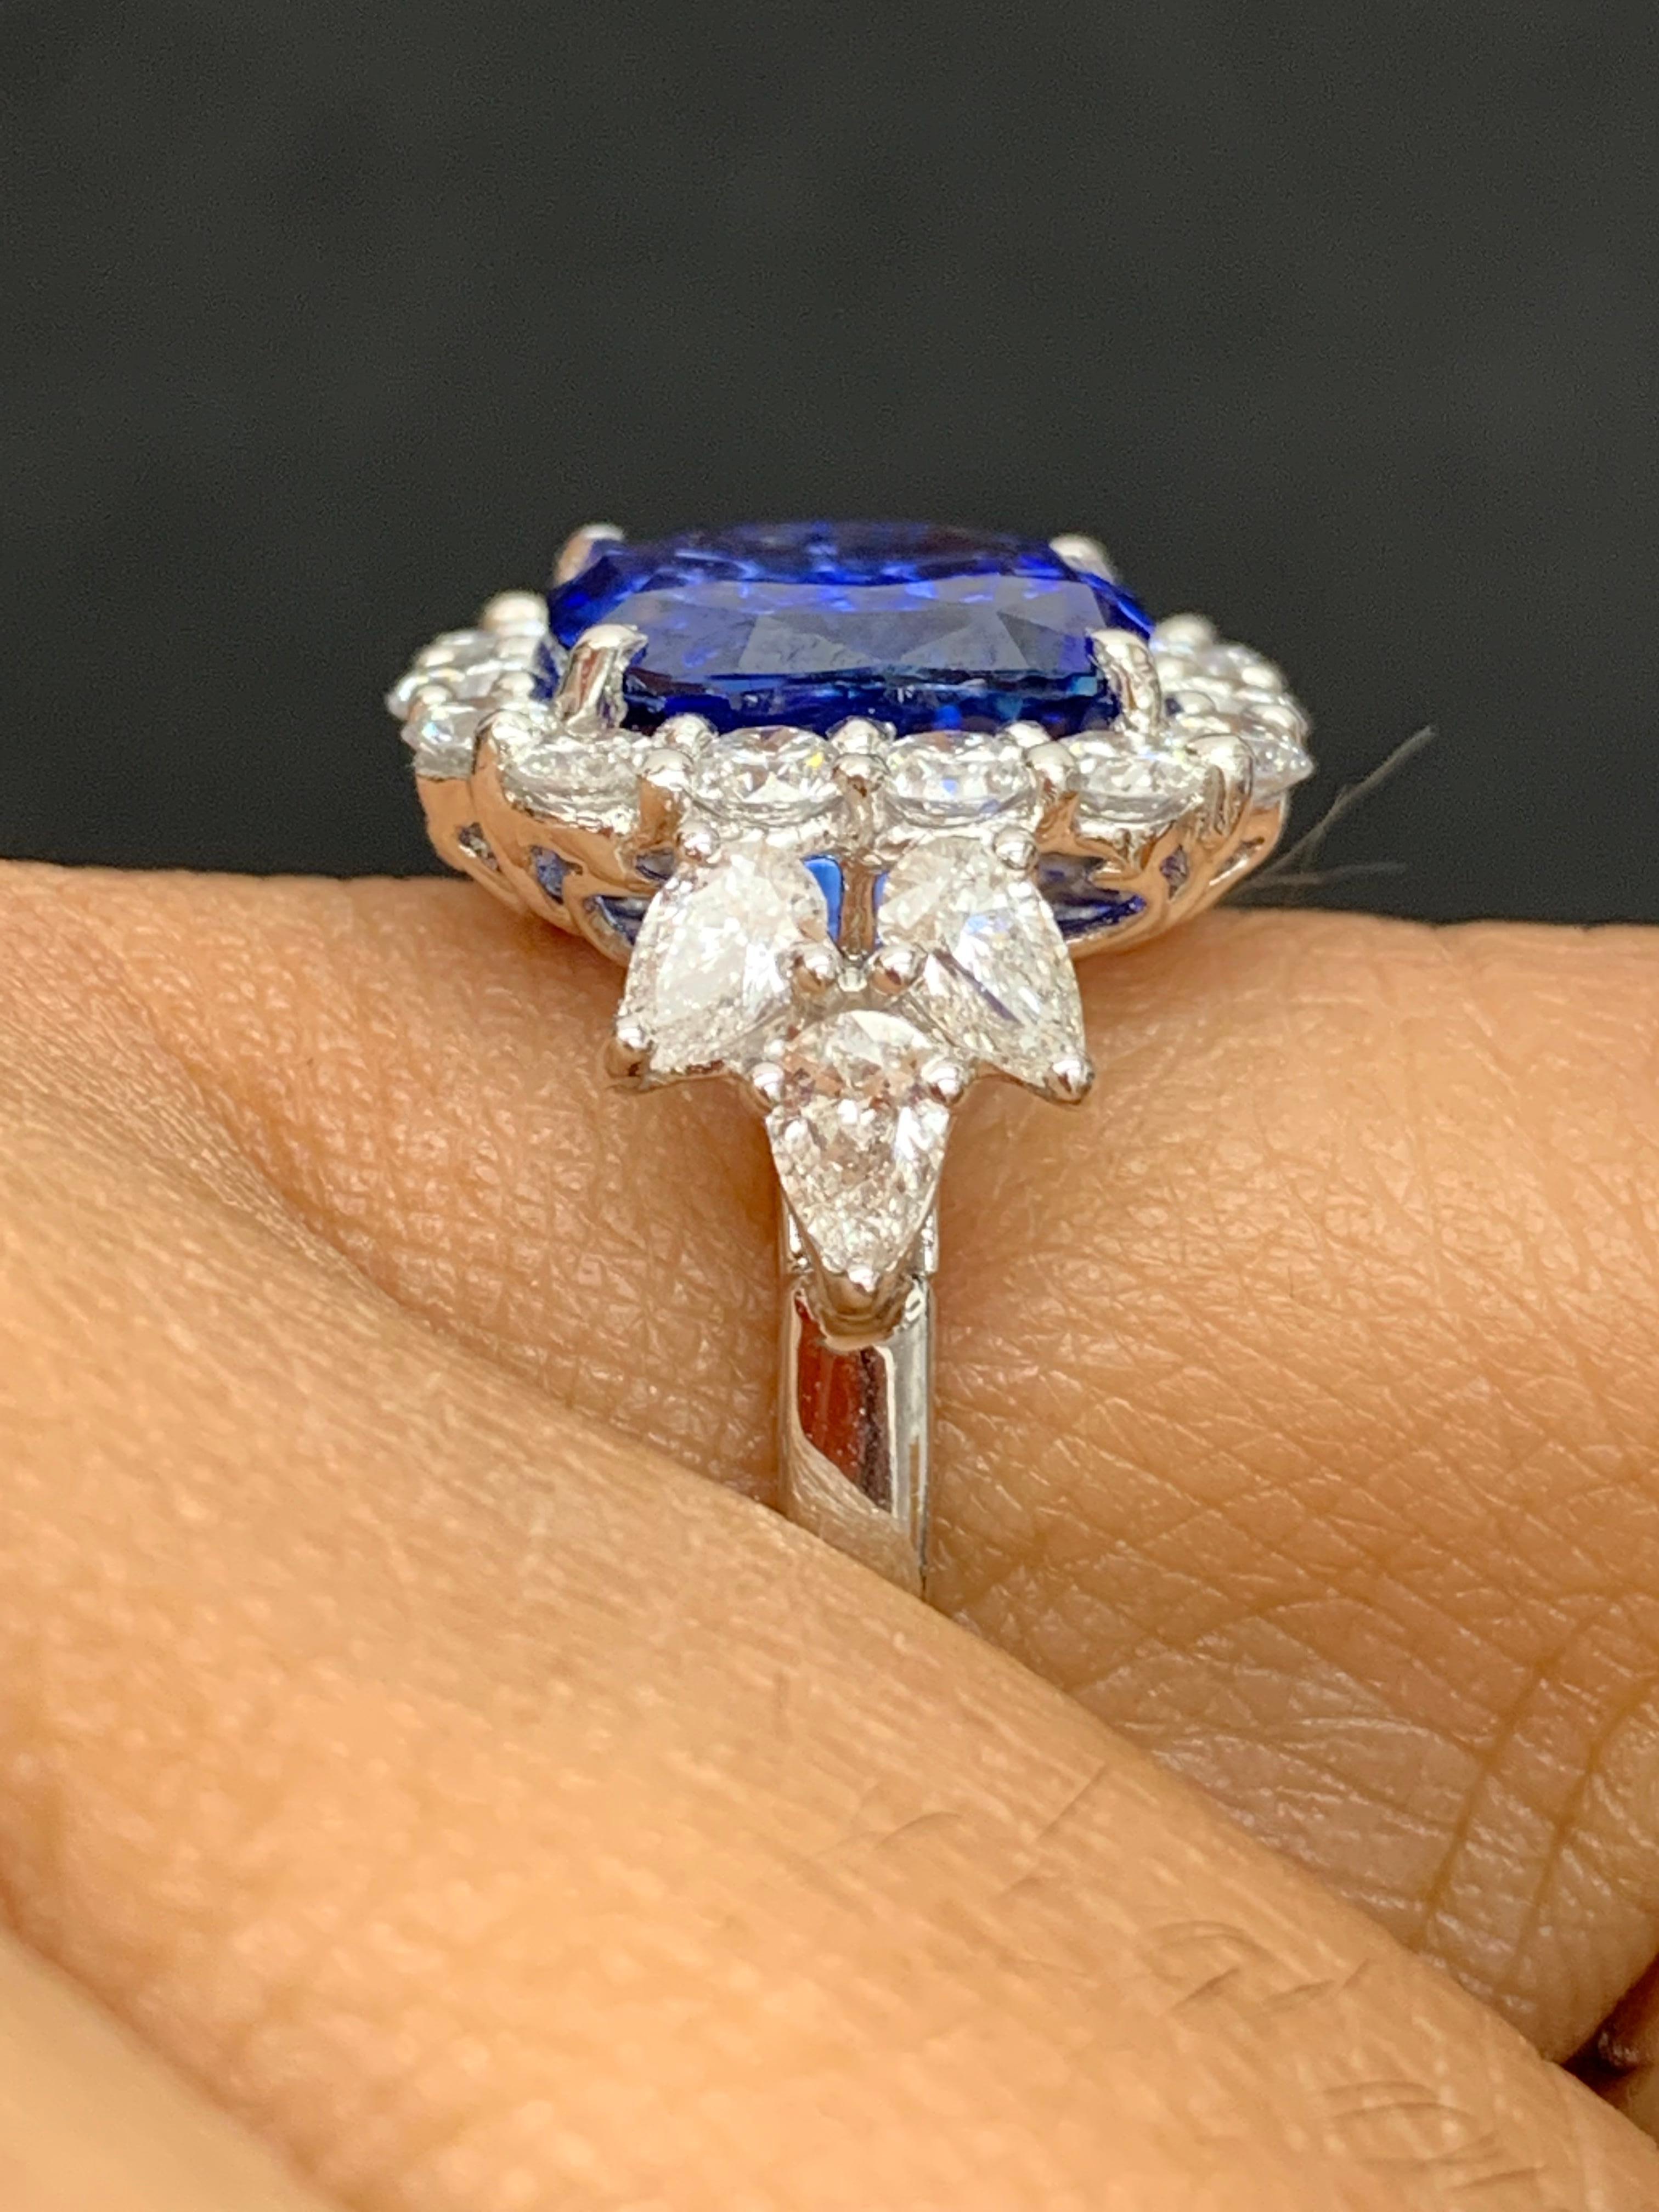 6.61 Carat Cushion Cut Blue Sapphire Diamond Engagement Ring in Platinum For Sale 1